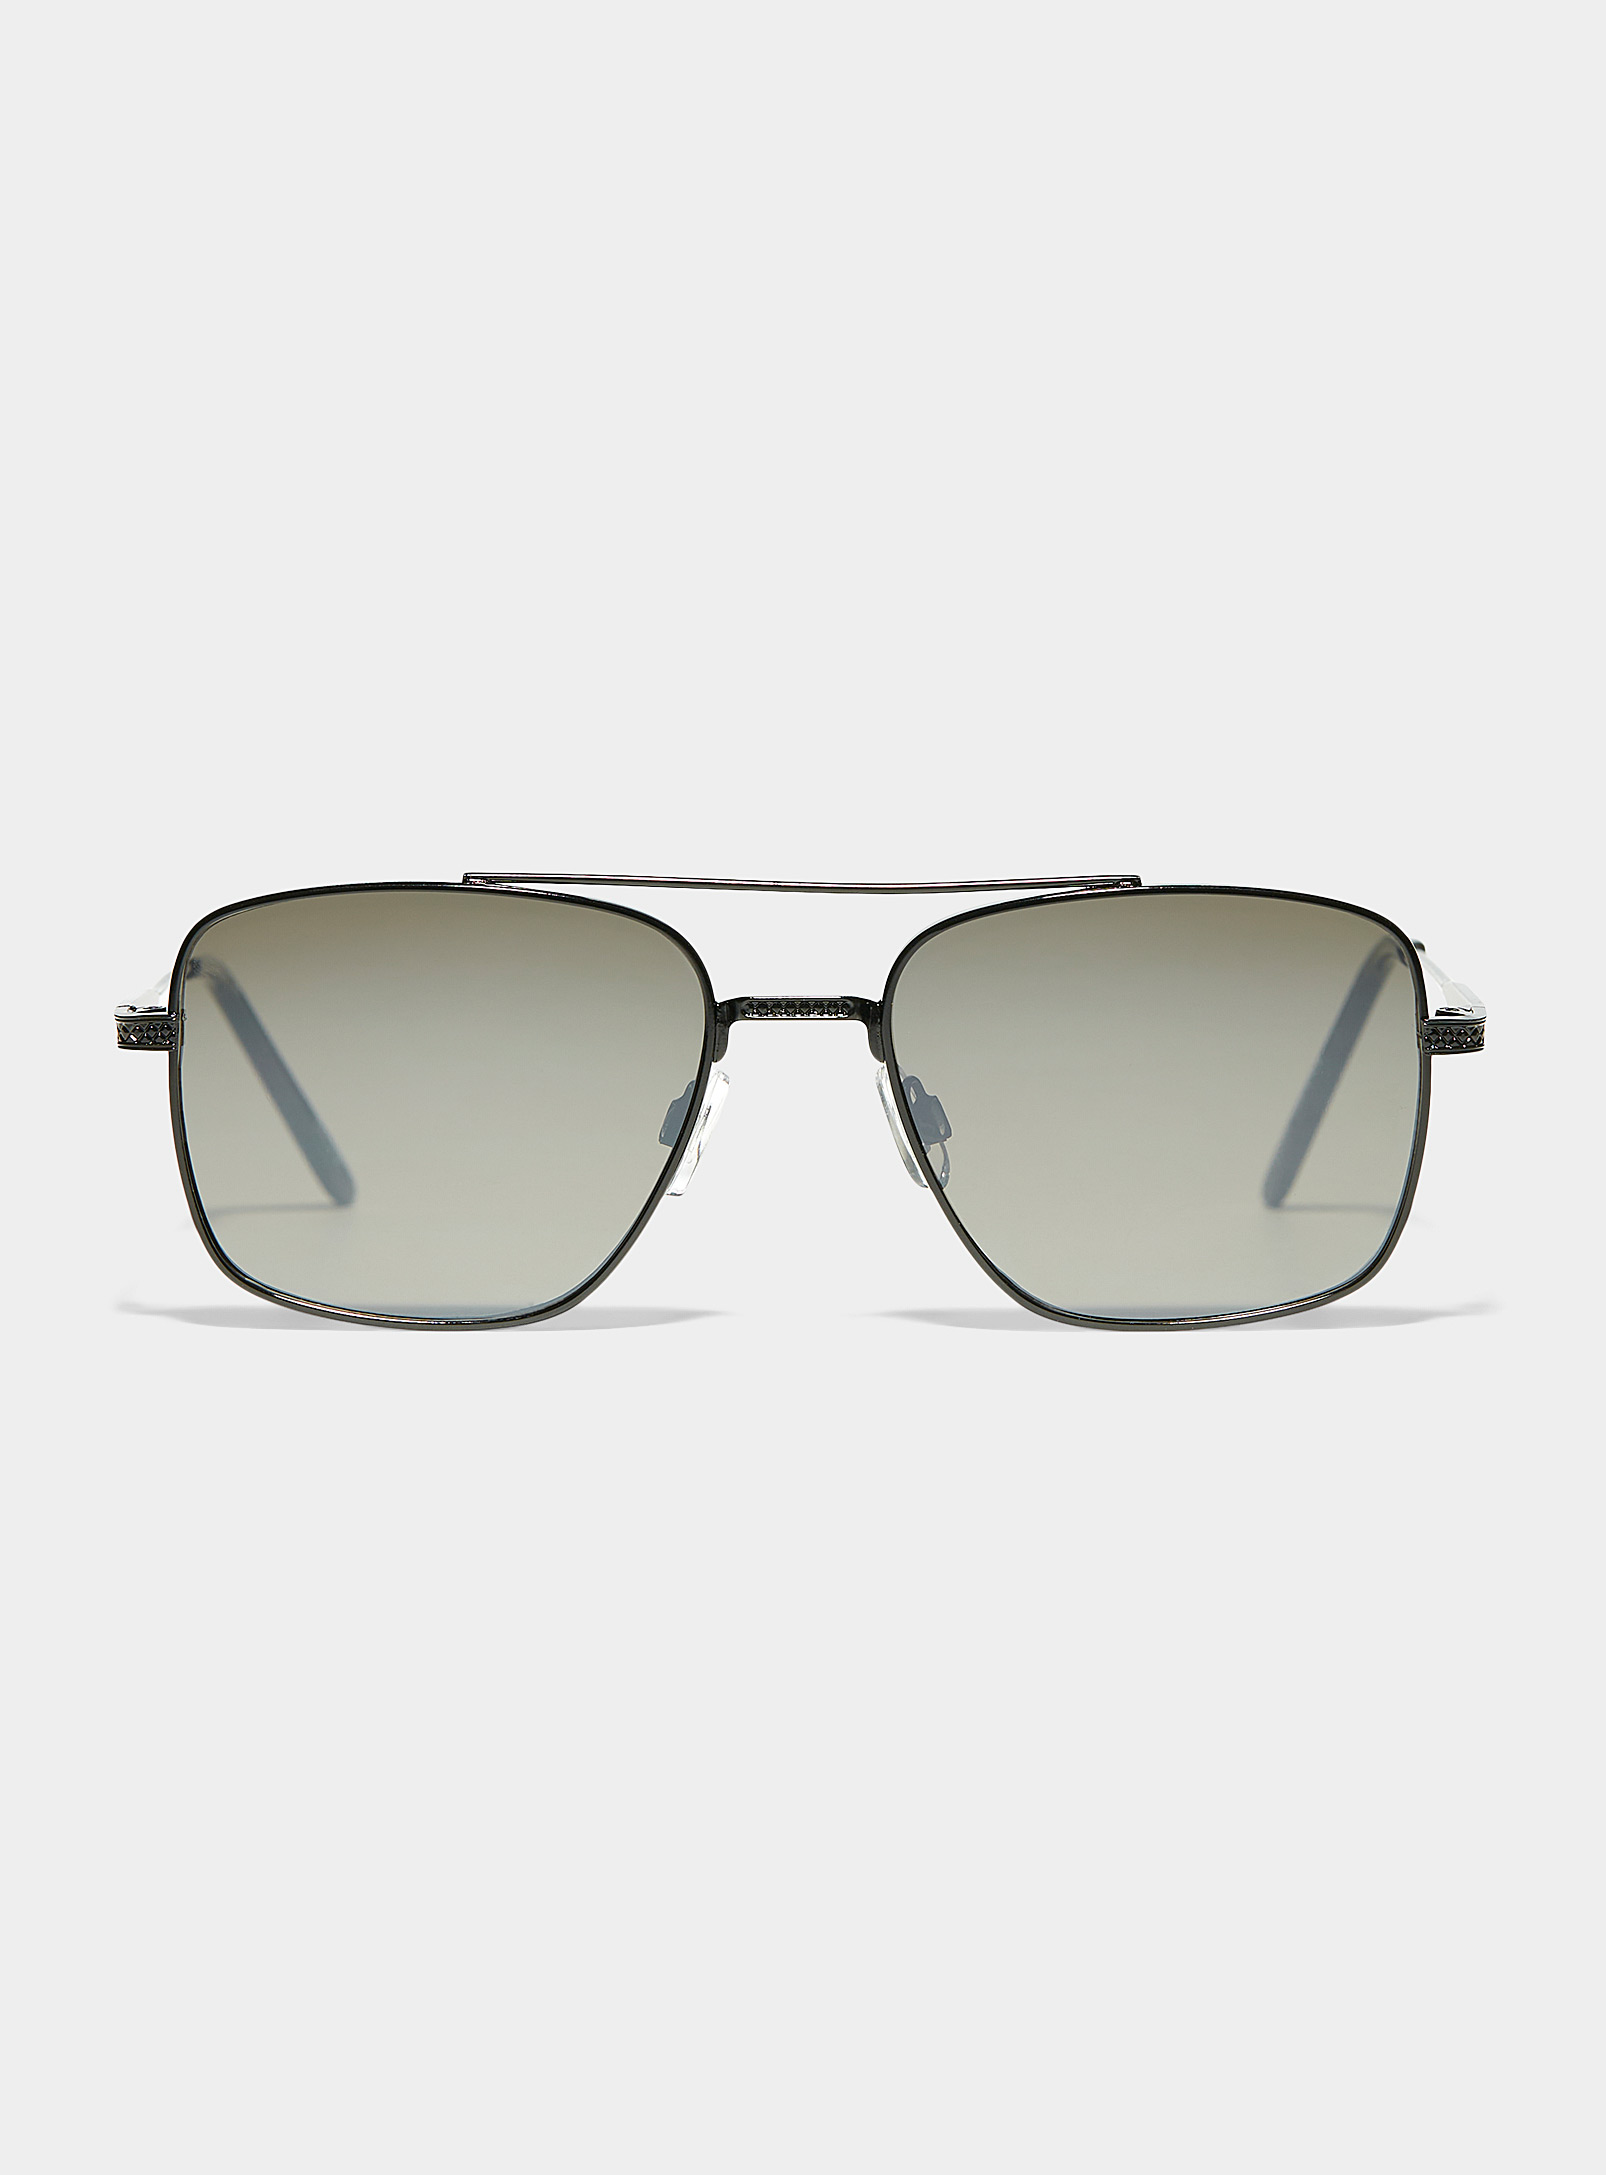 Le 31 Lawrence Aviator Sunglasses In Metallic